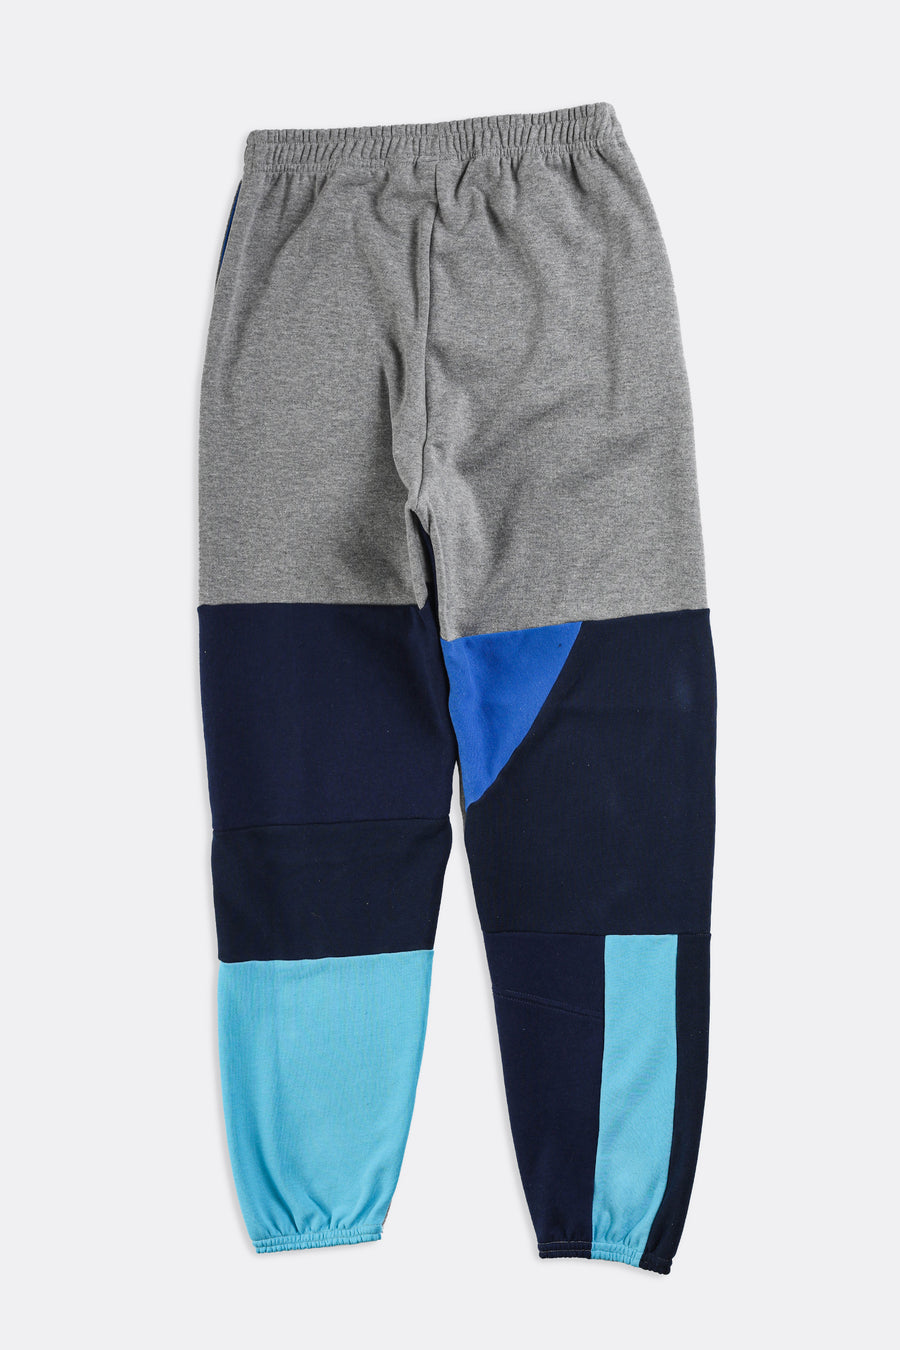 Unisex Patchwork Adidas Sweatpants - Women-S, Men-XS